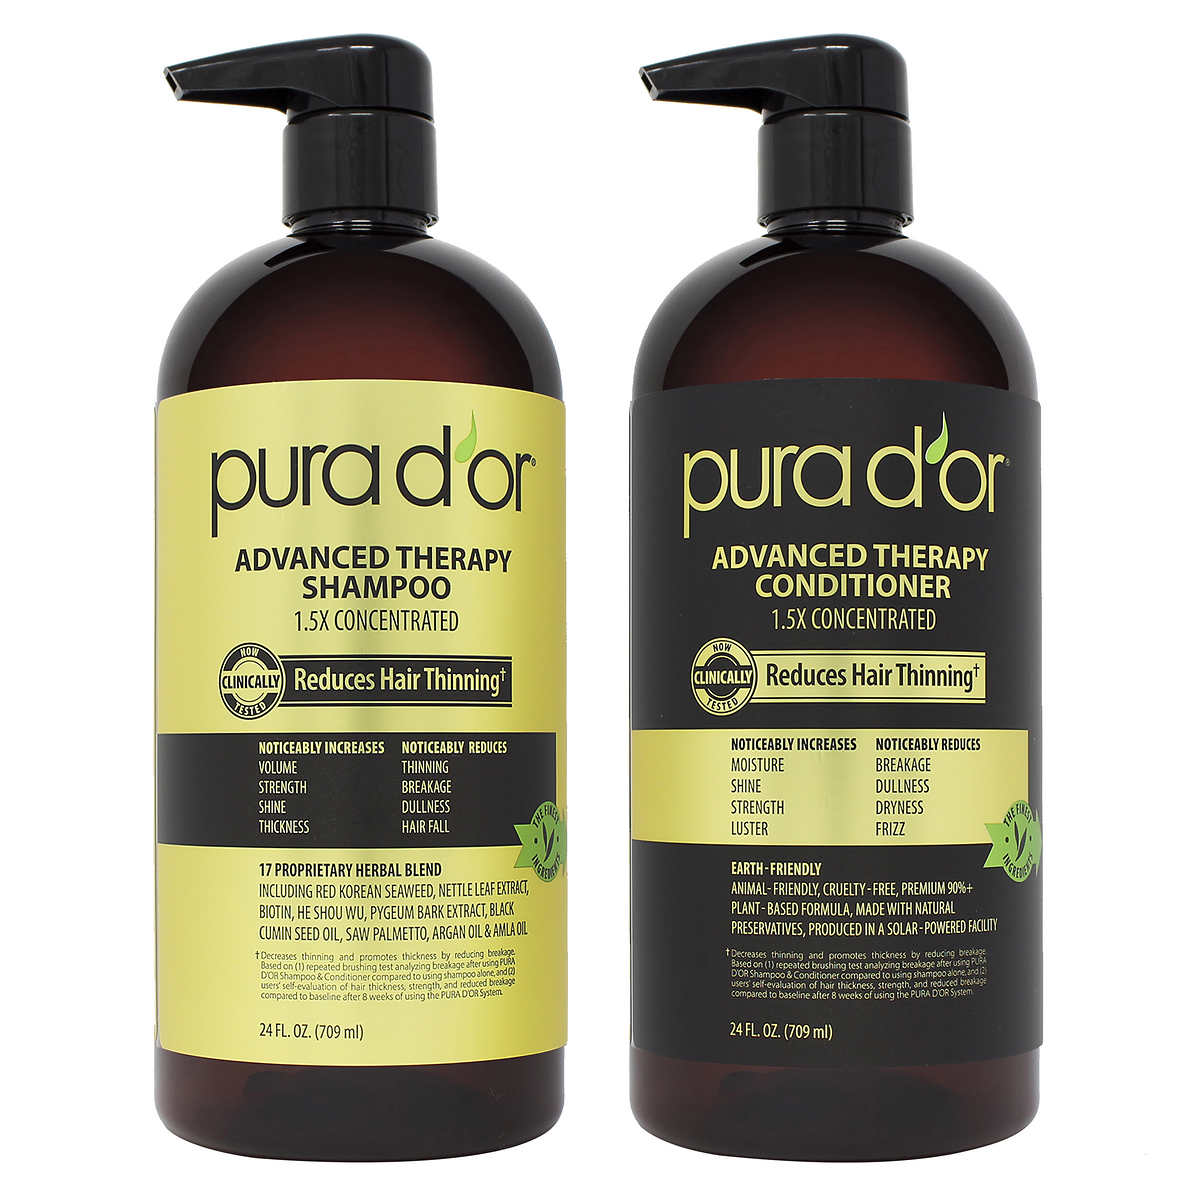 Pura d'or Advanced Therapy Anti-Hair Thinning Shampoo